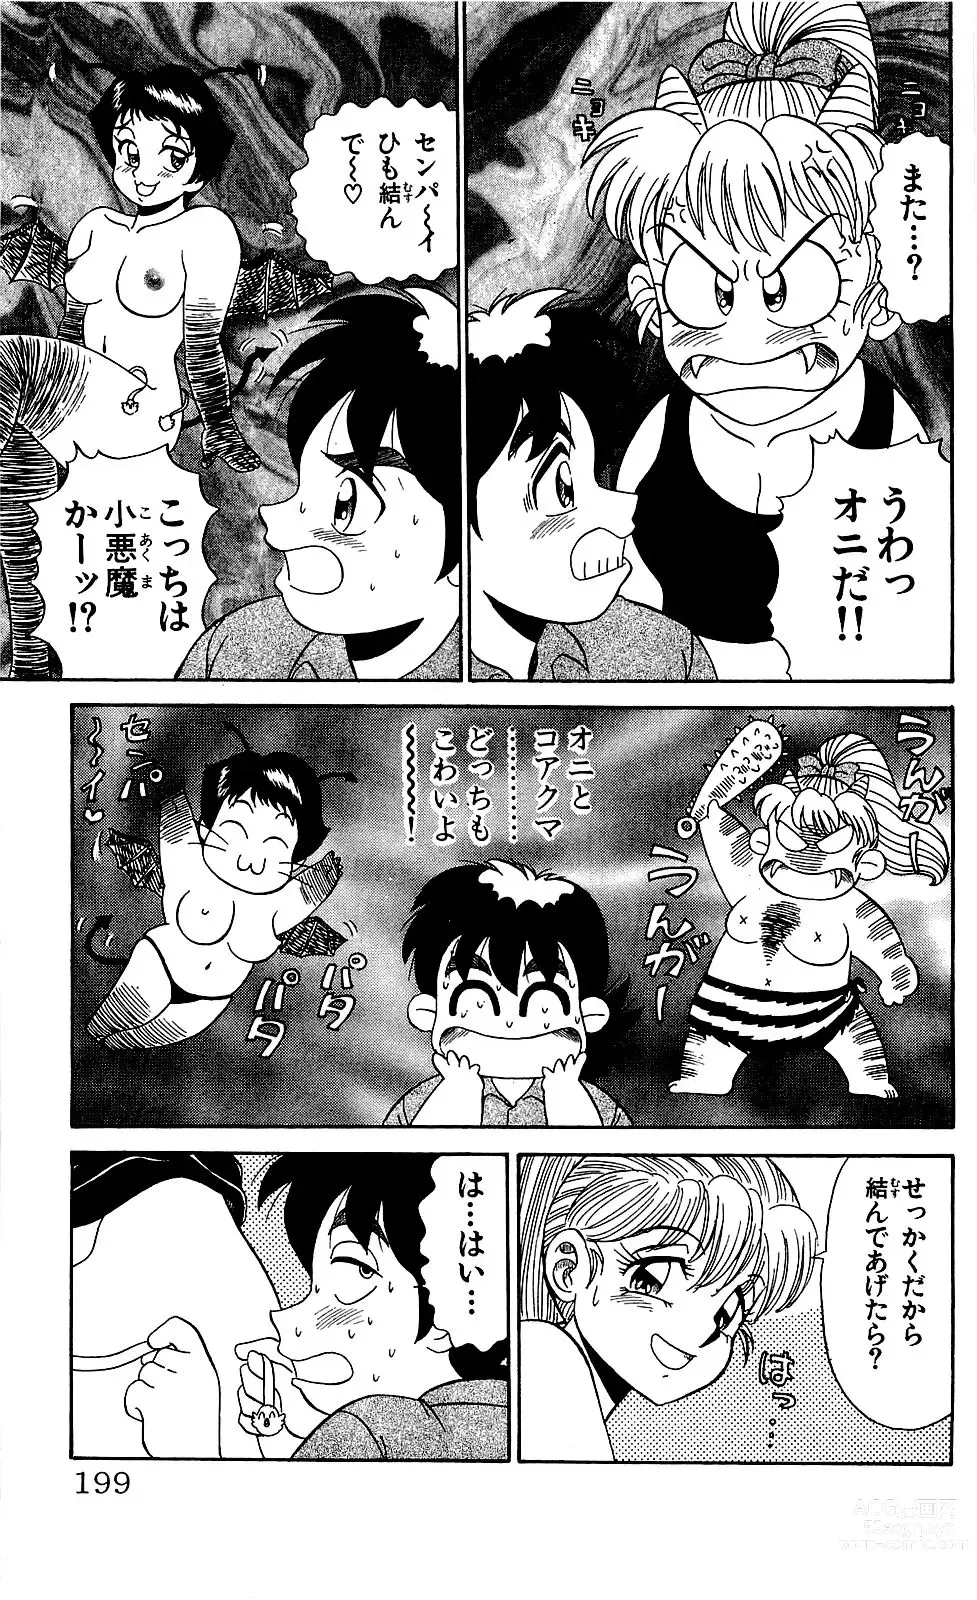 Page 197 of manga Orette Piyoritan Vol. 1